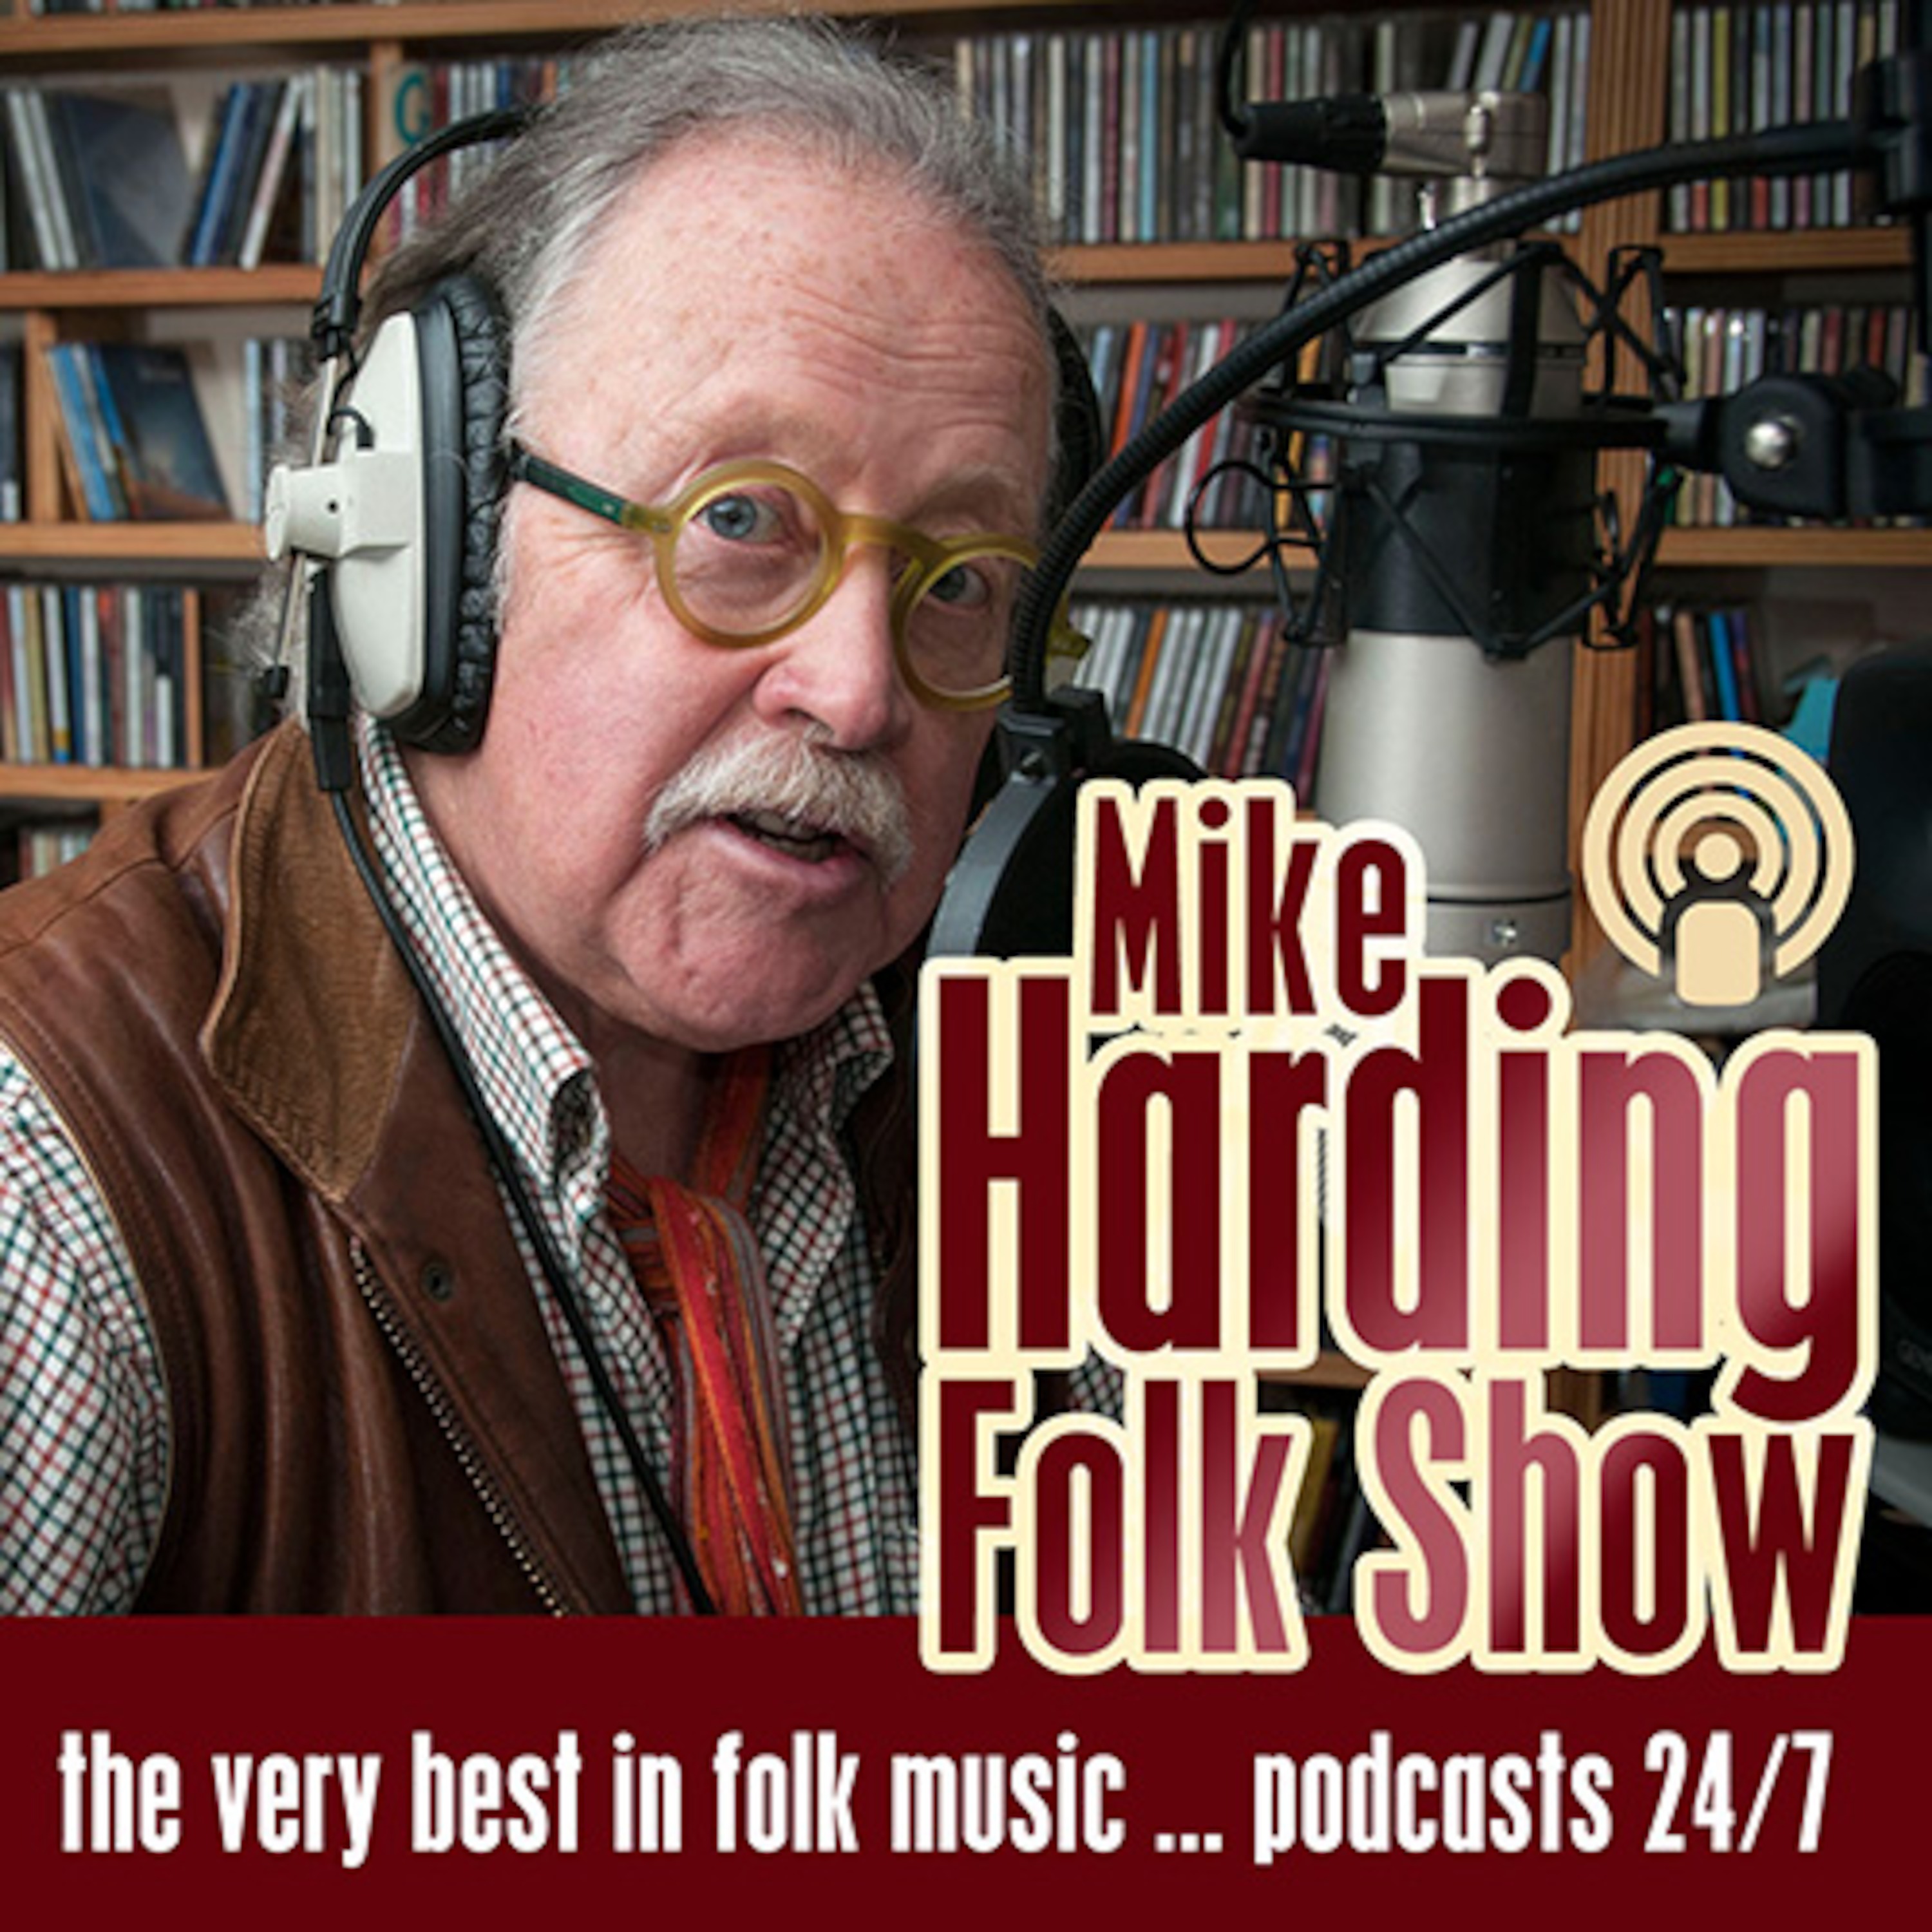 Mike Harding Folk Show 166